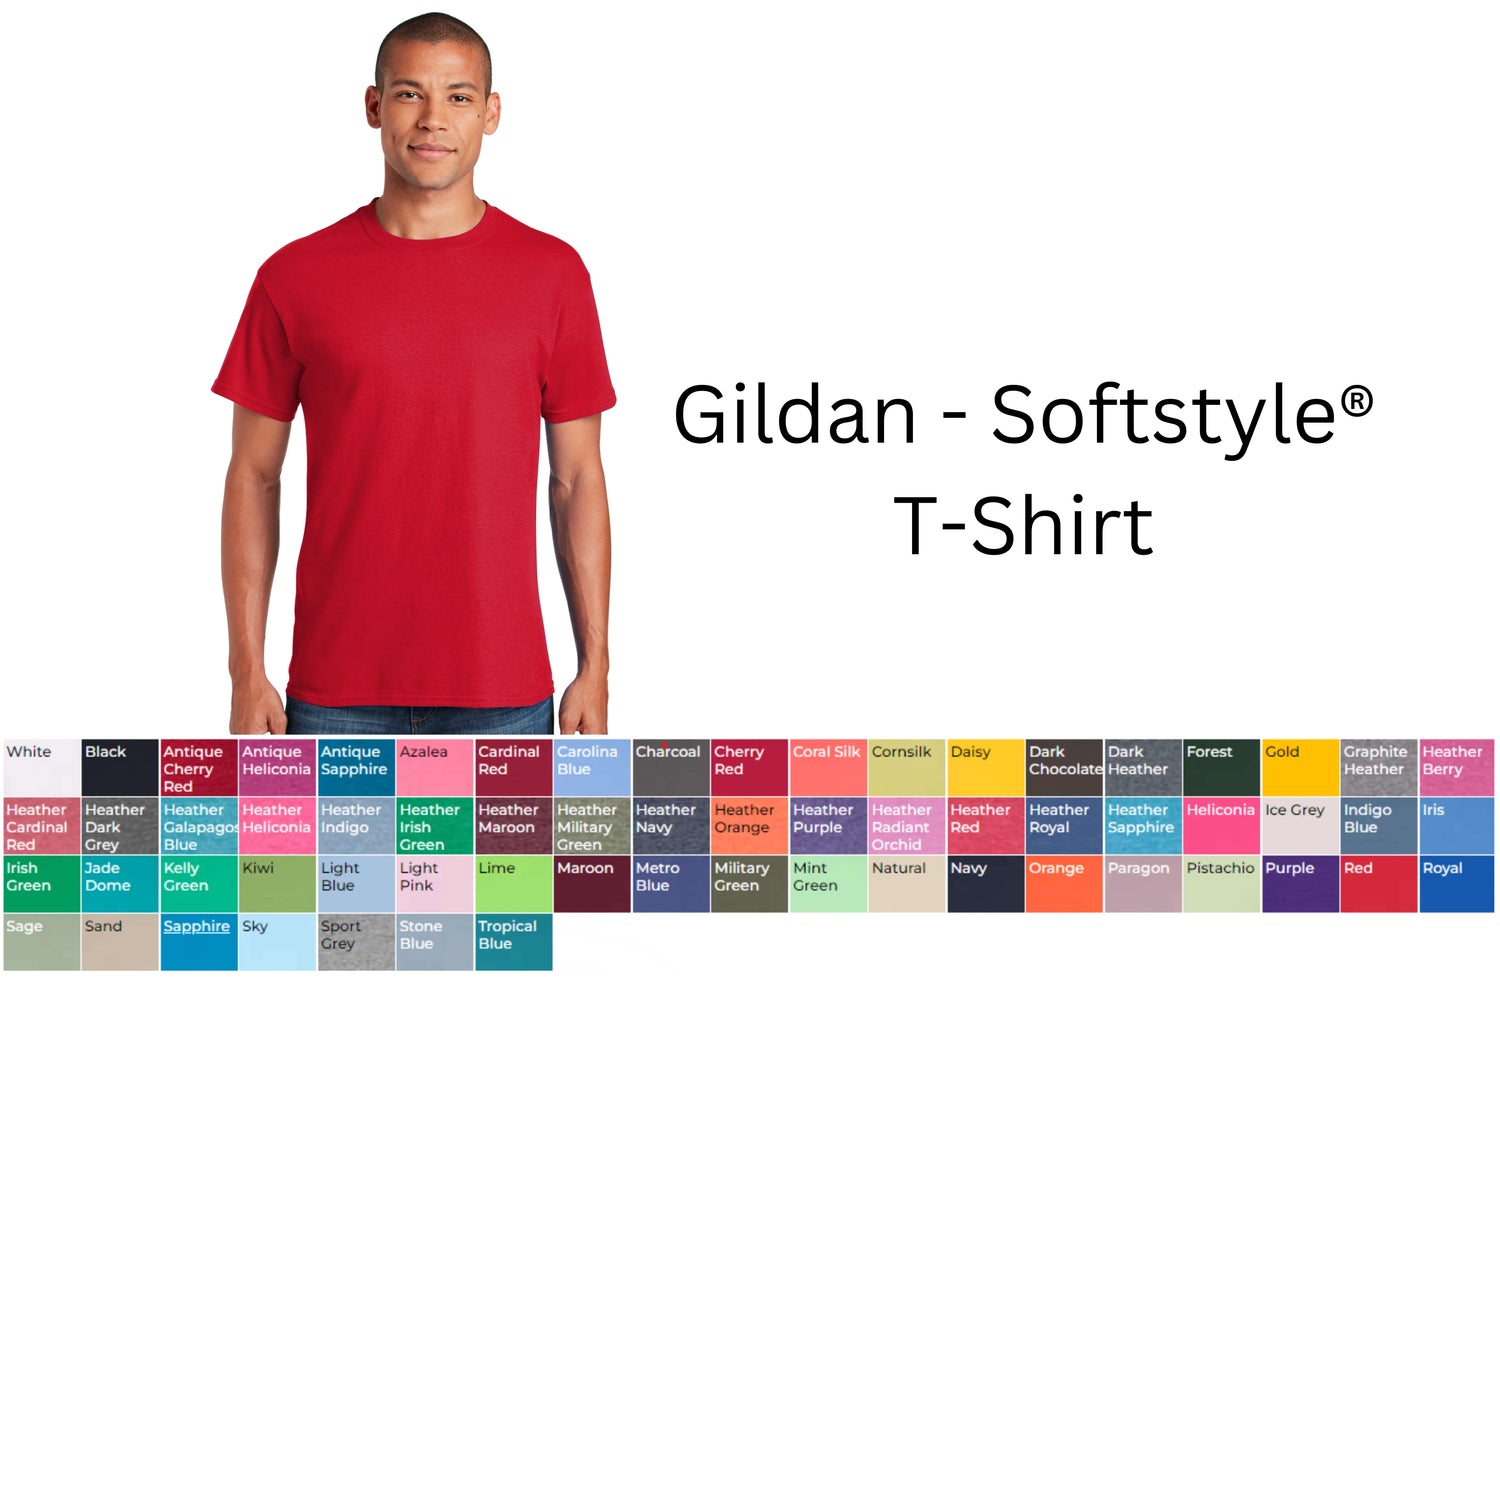 Gildan Softstyle Tshirt